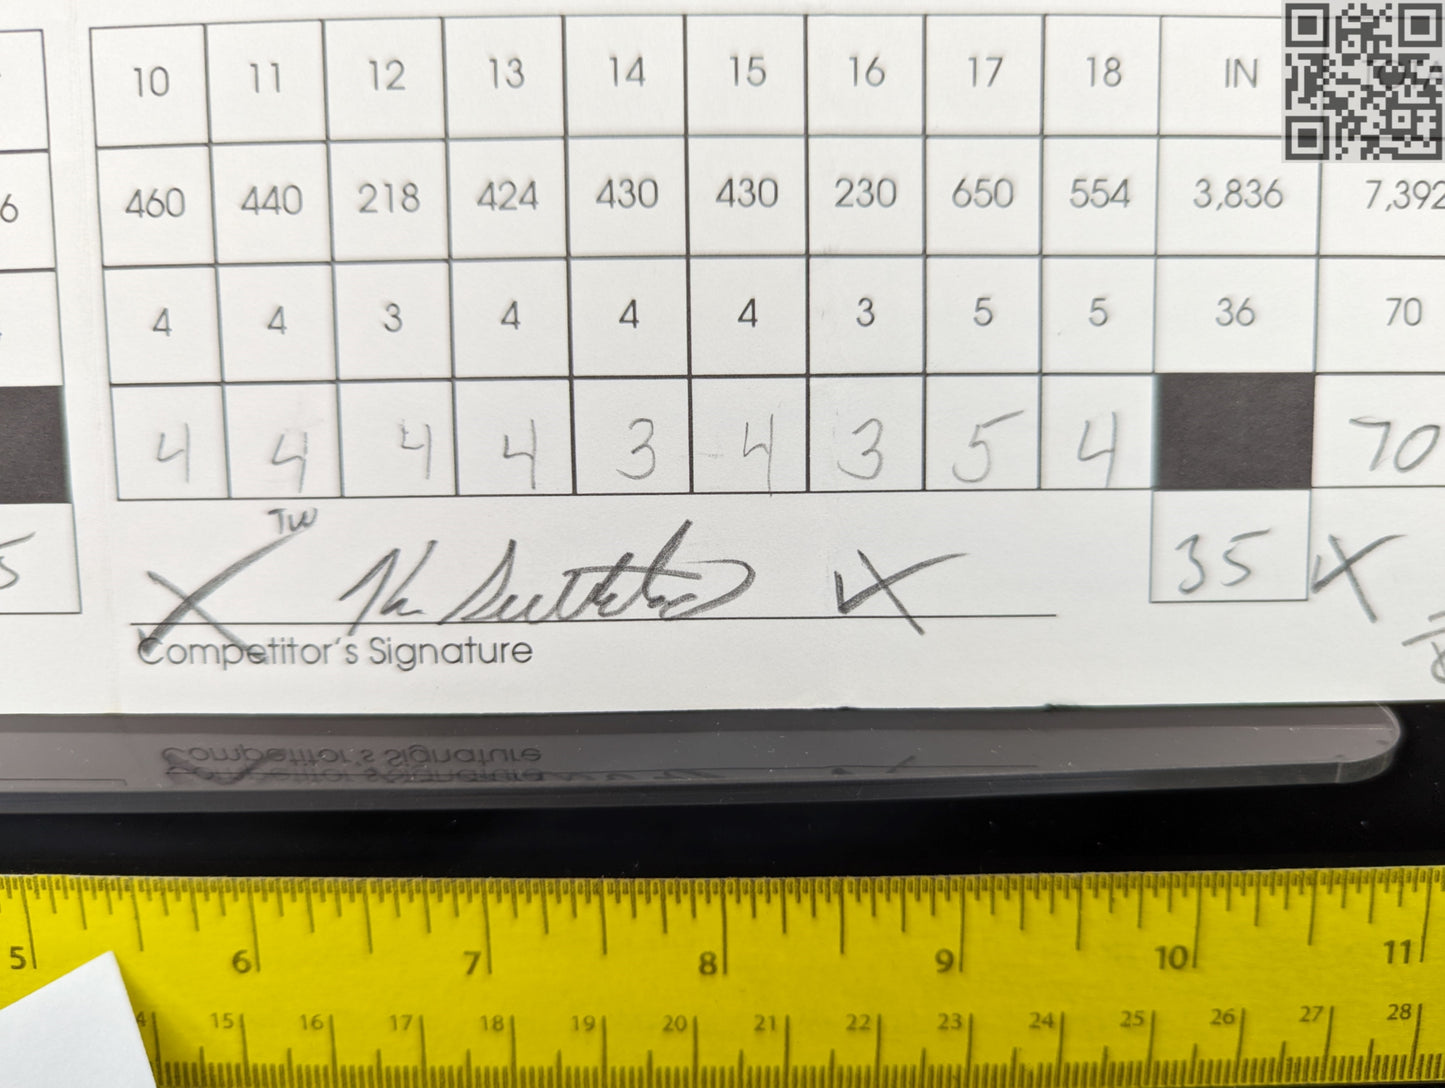 2005 PGA Championship Baltusrol Tiger Woods Signed Official Tournament Scorecard